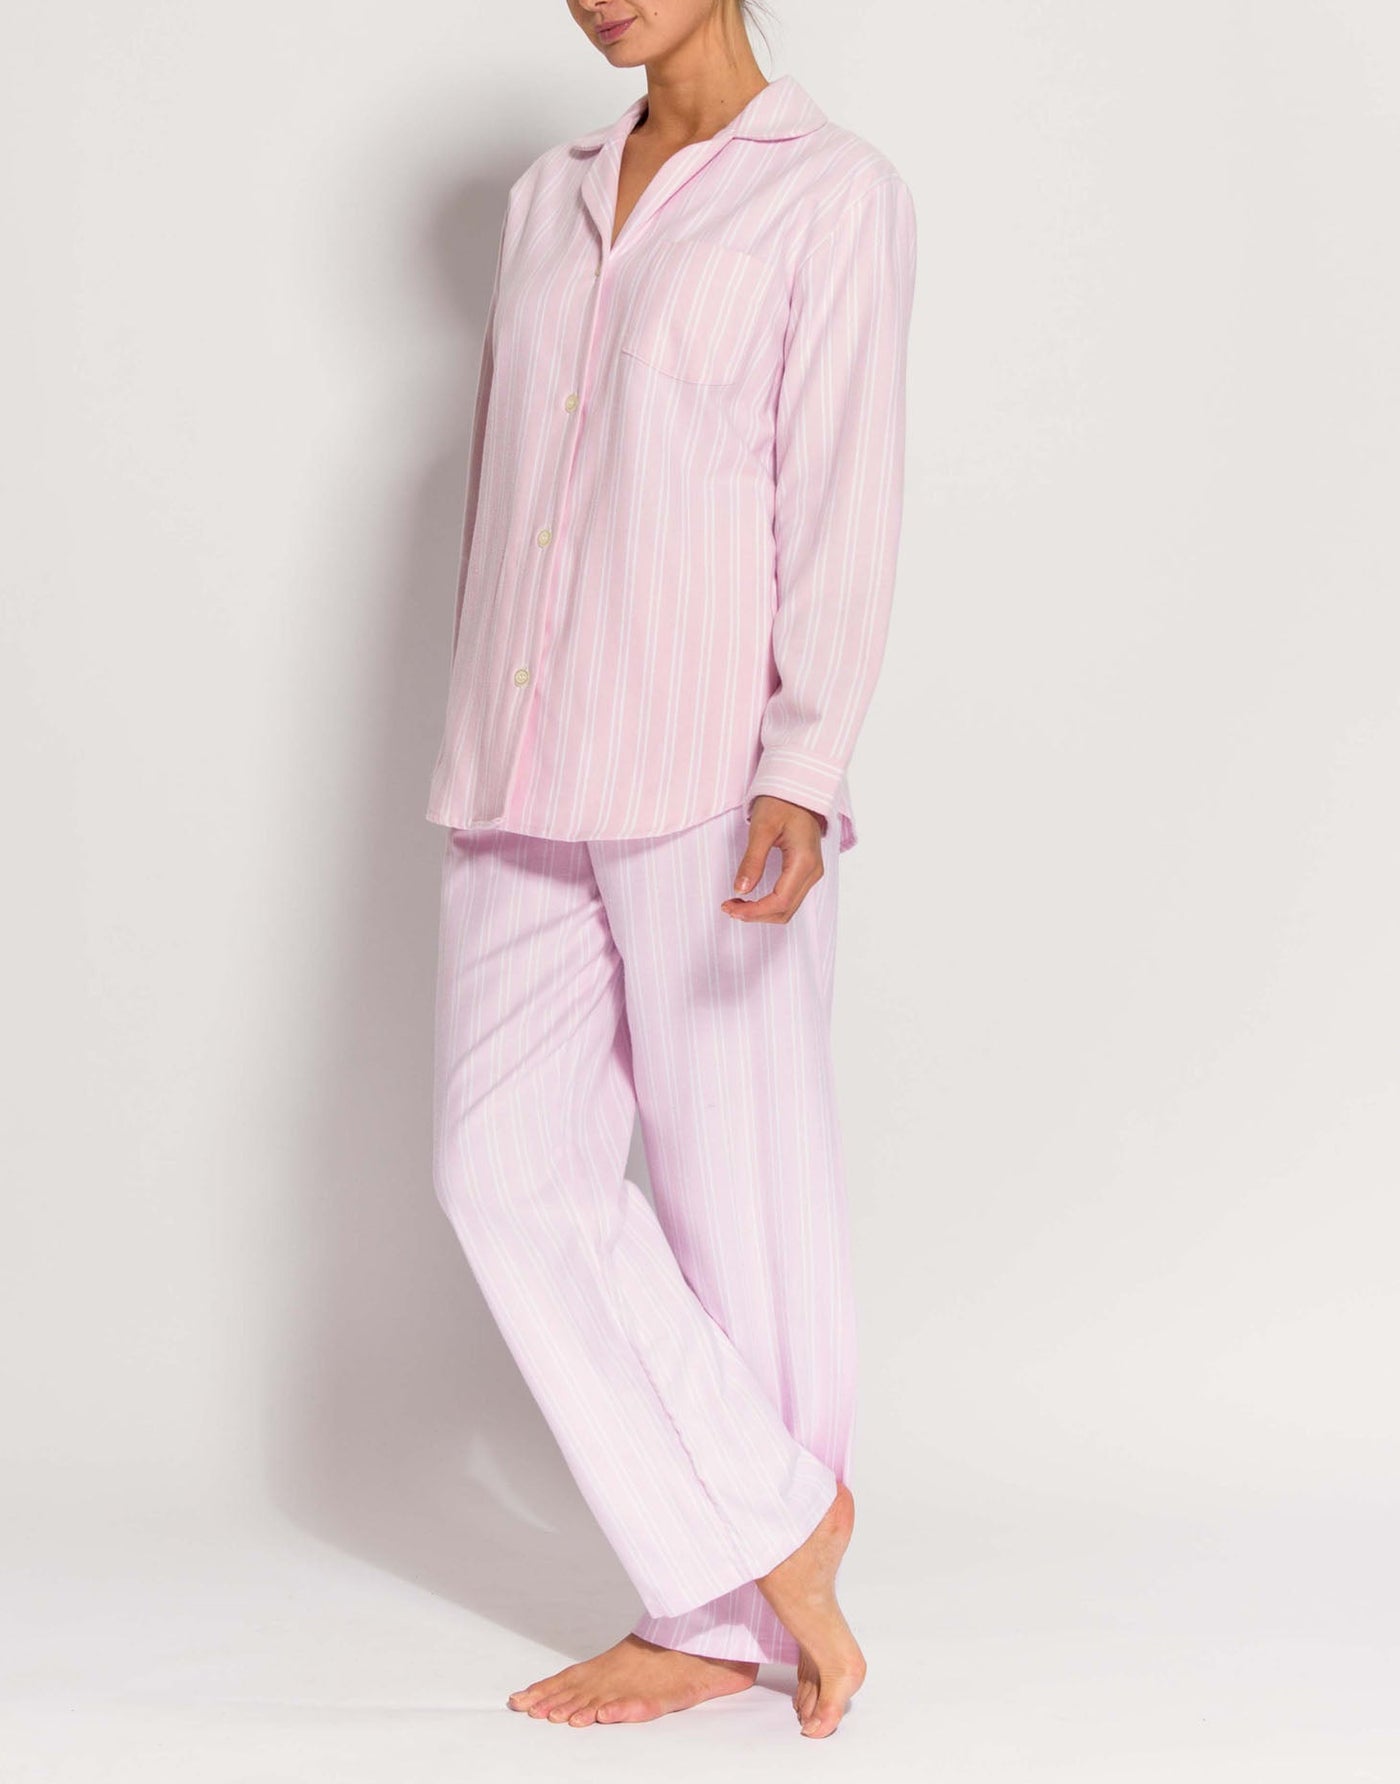 Ladies Pyjamas in Brushed Cotton Icecream Stripe - The Pyjama House